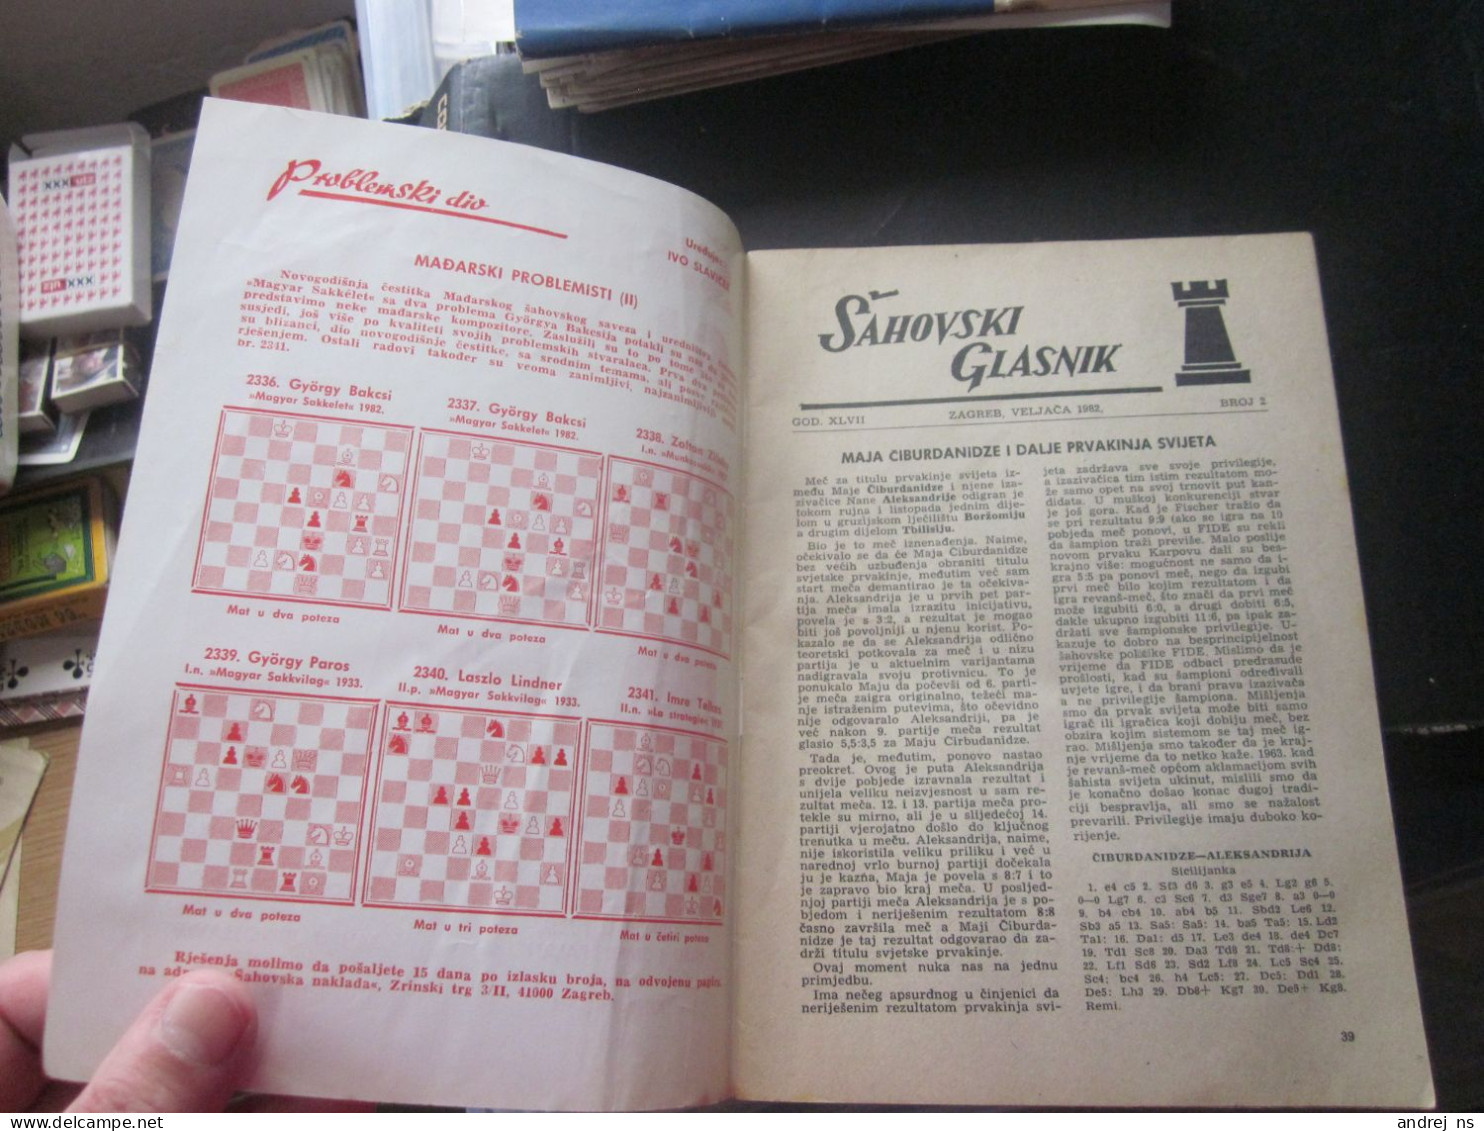 Sahovski Glasnik Chess 1982 - Idiomas Escandinavos